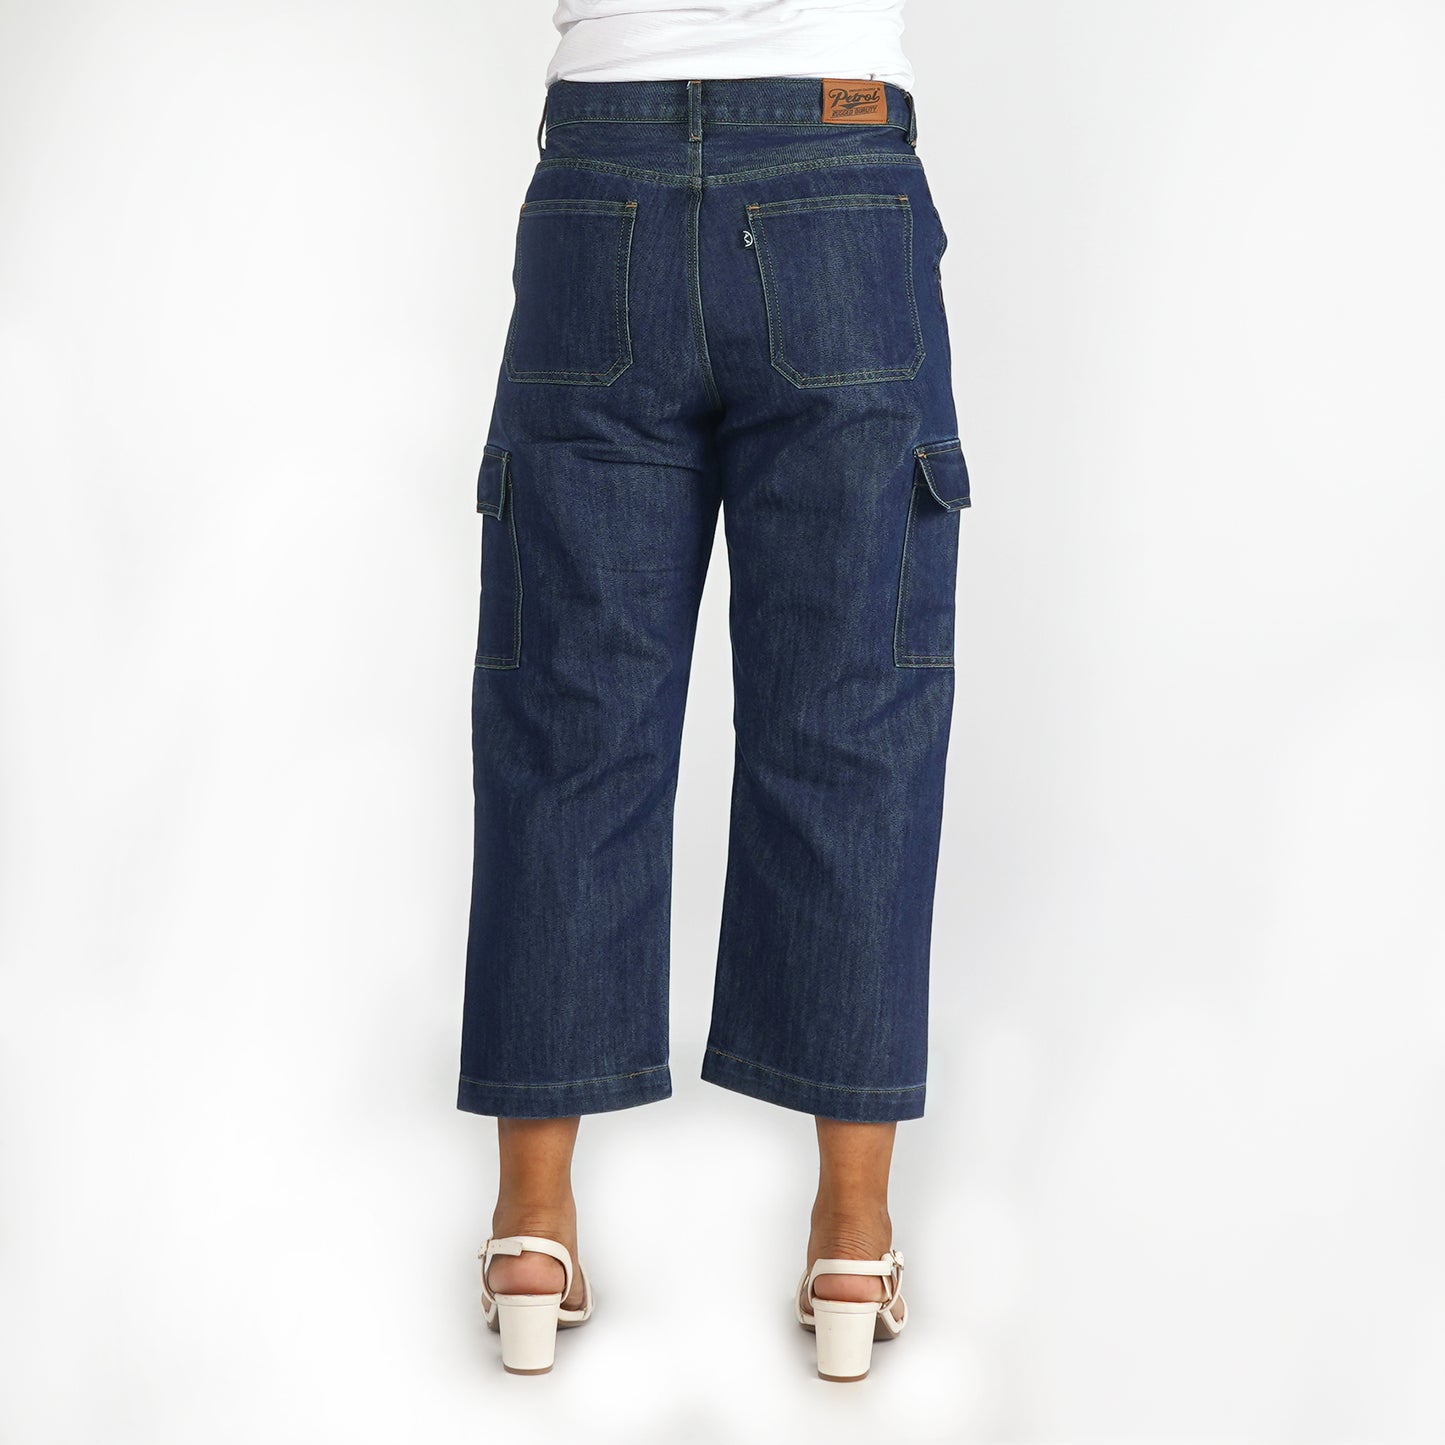 Petrol Ladies Basic Denim Cargo Jeans for Ladies Trendy Fashion High Quality Apparel Comfortable Casual Cargo Pants for Ladies Mid Waist 151712 (Dark Shade)